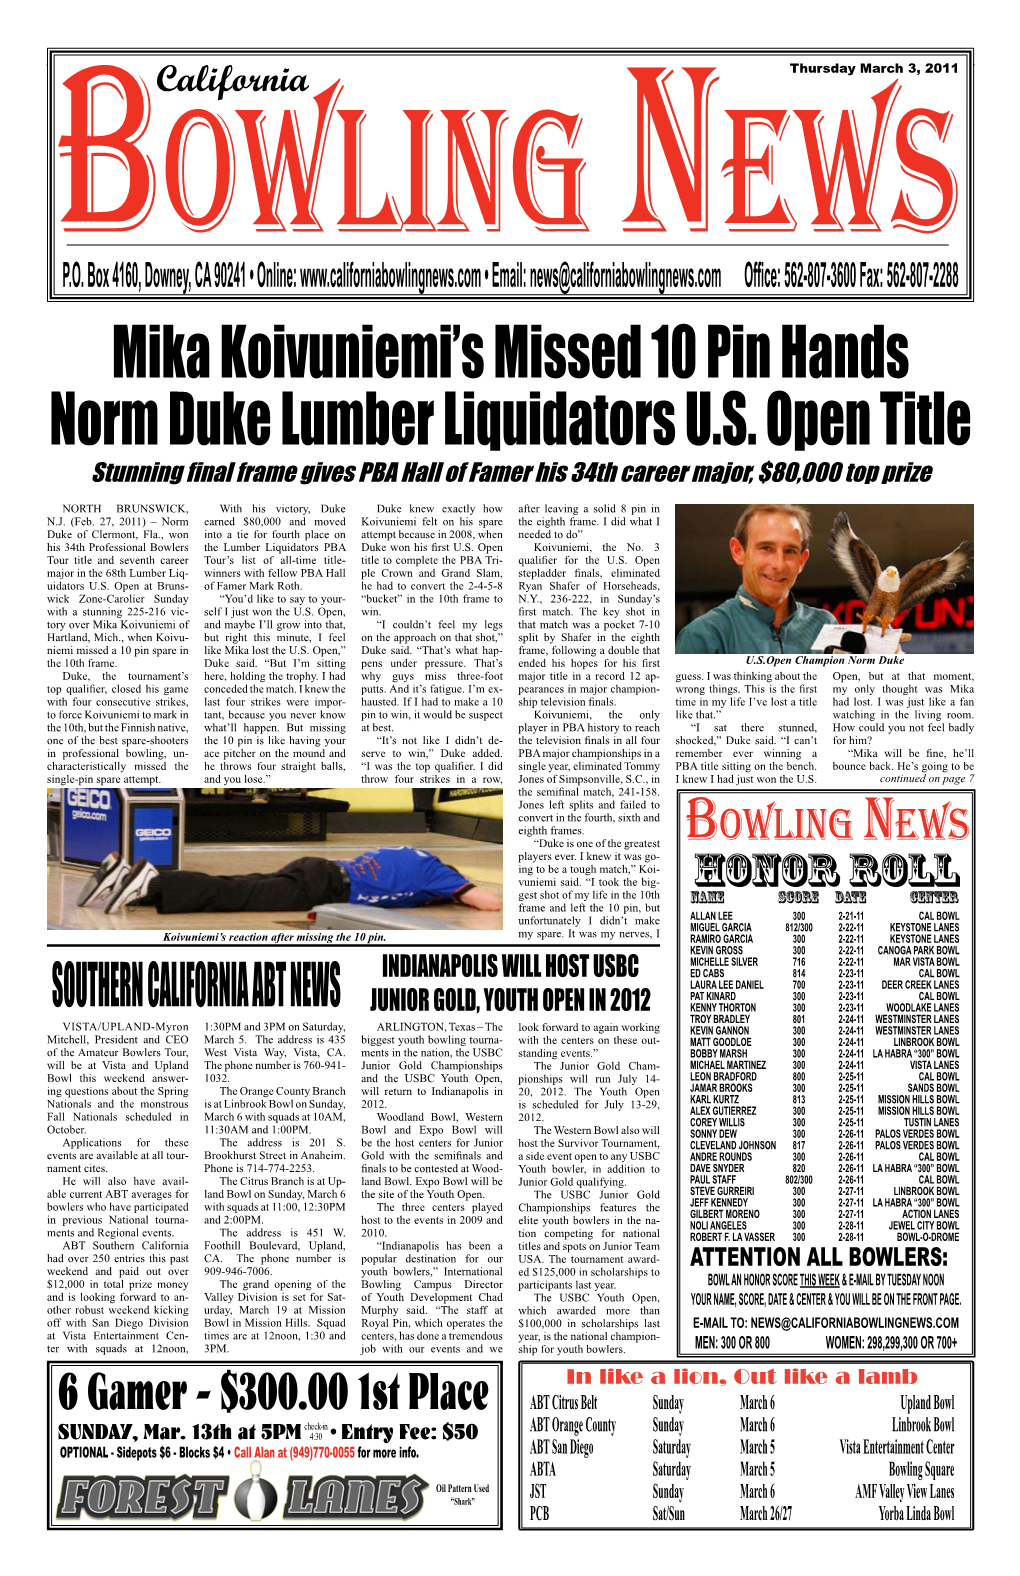 Mika Koivuniemi's Missed 10 Pin Hands Norm Duke Lumber